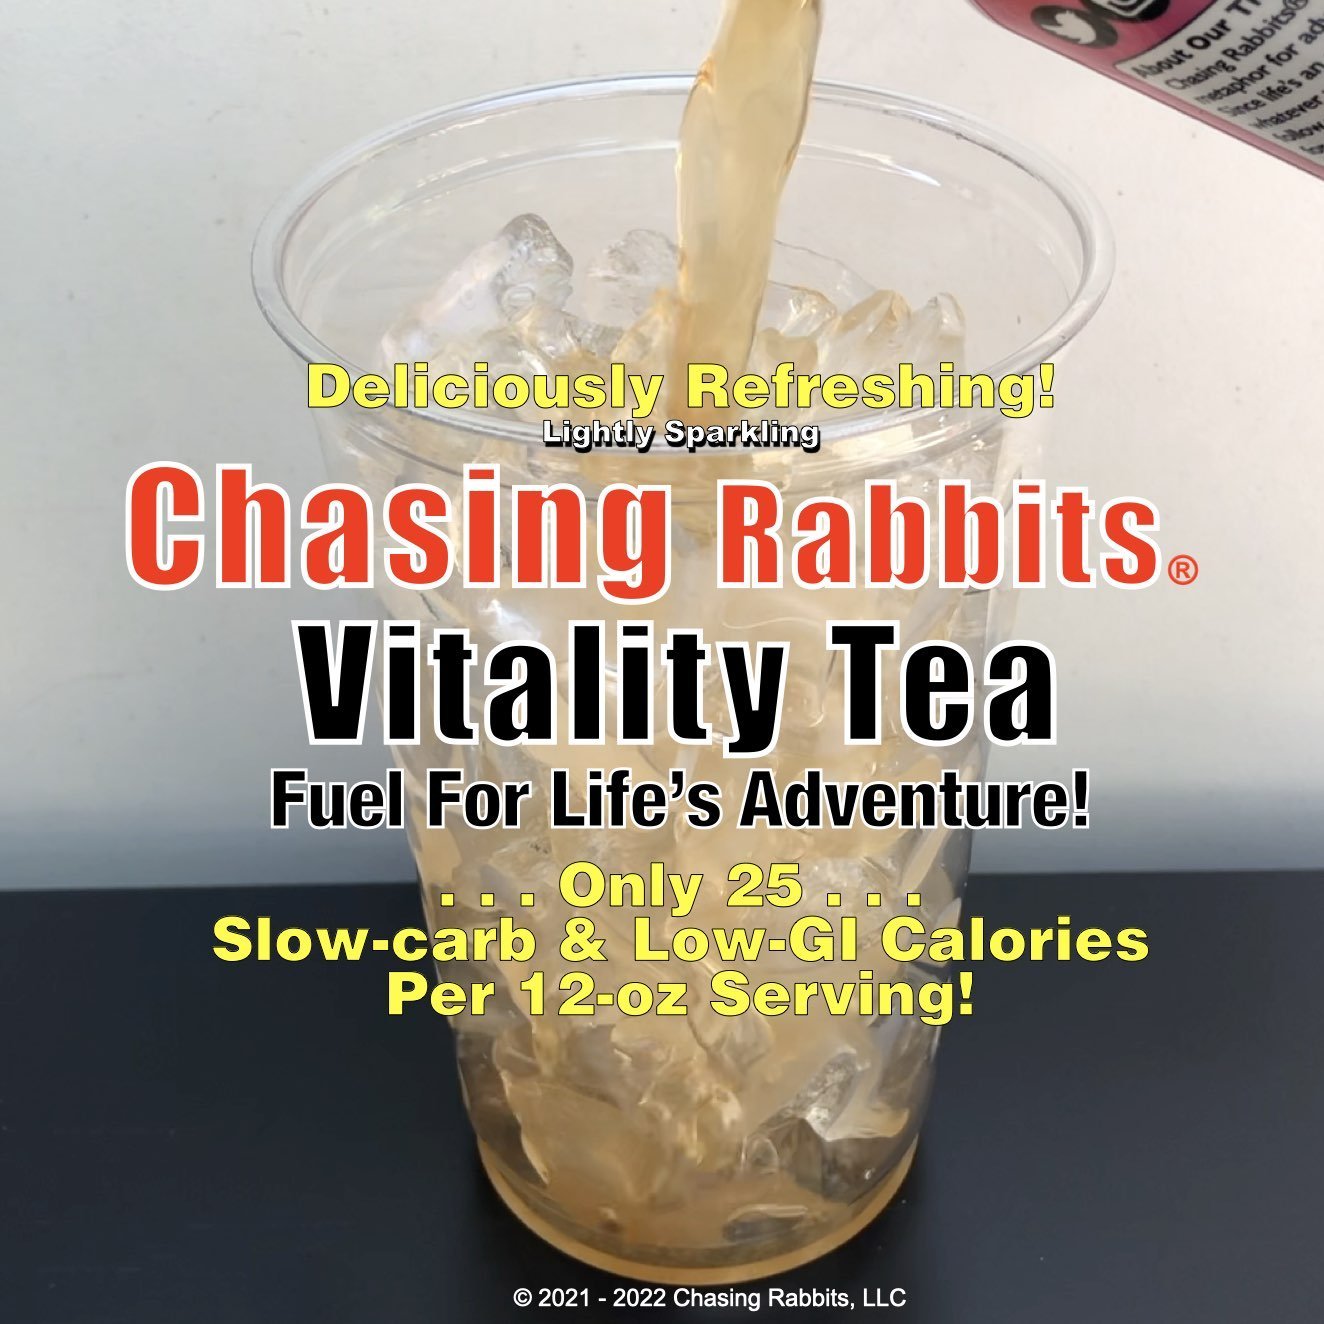 Deliciously Refreshing Chasing Rabbits® Vitality Tea